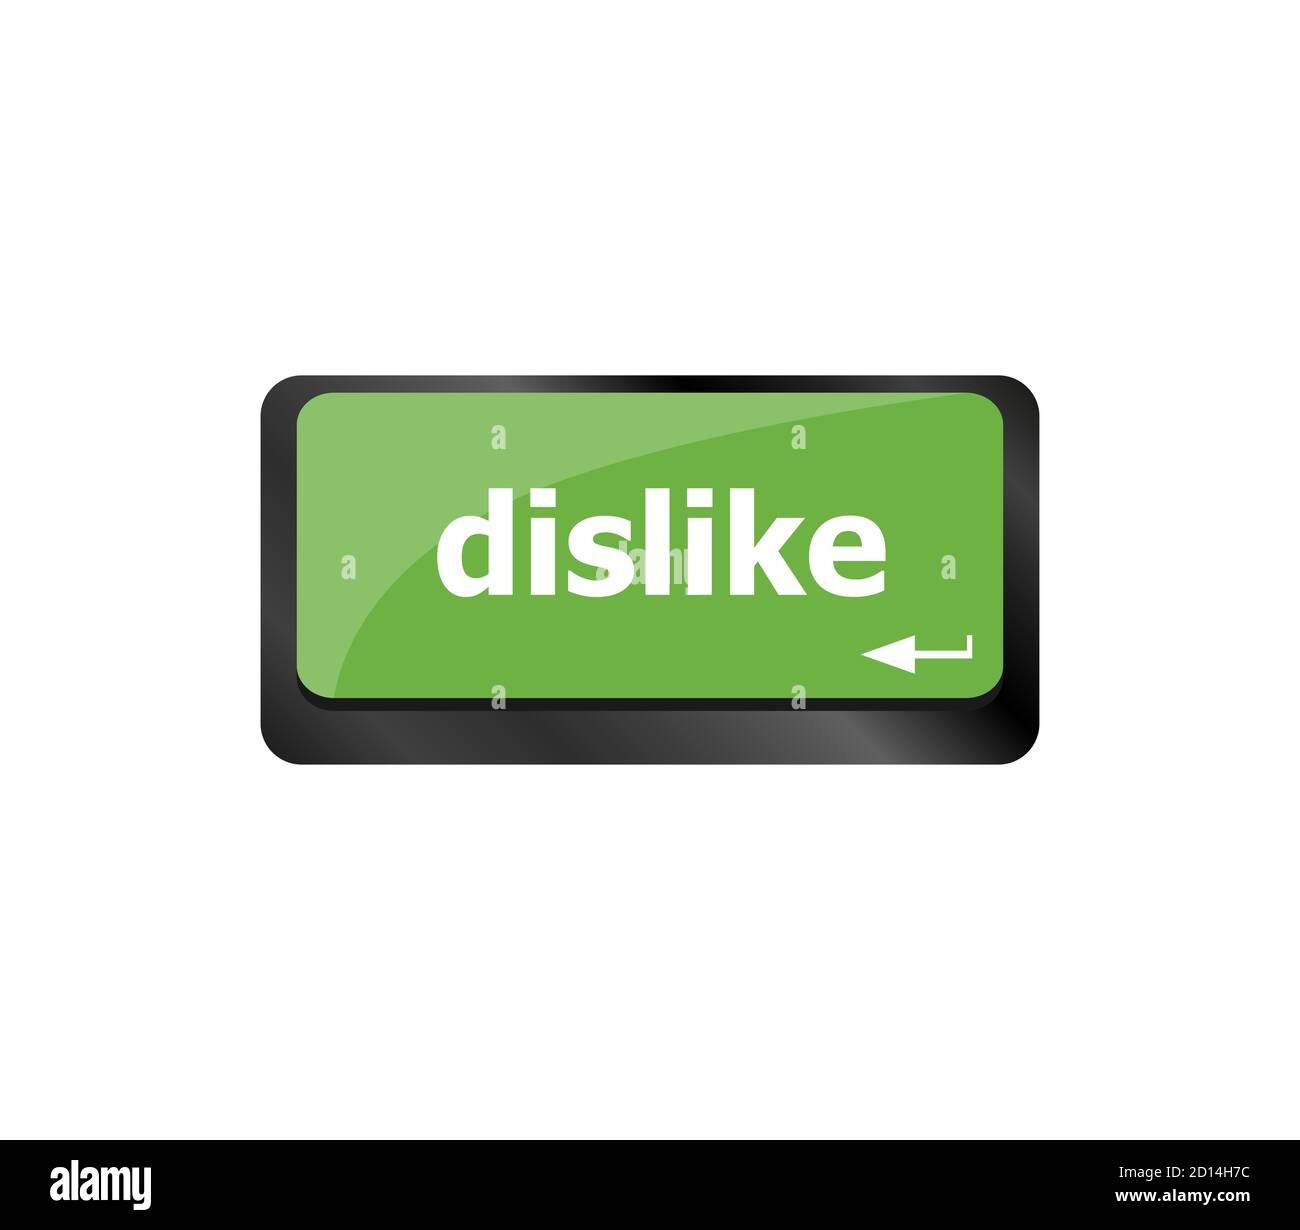 dislike key on keyboard for anti social media concepts Stock Photo